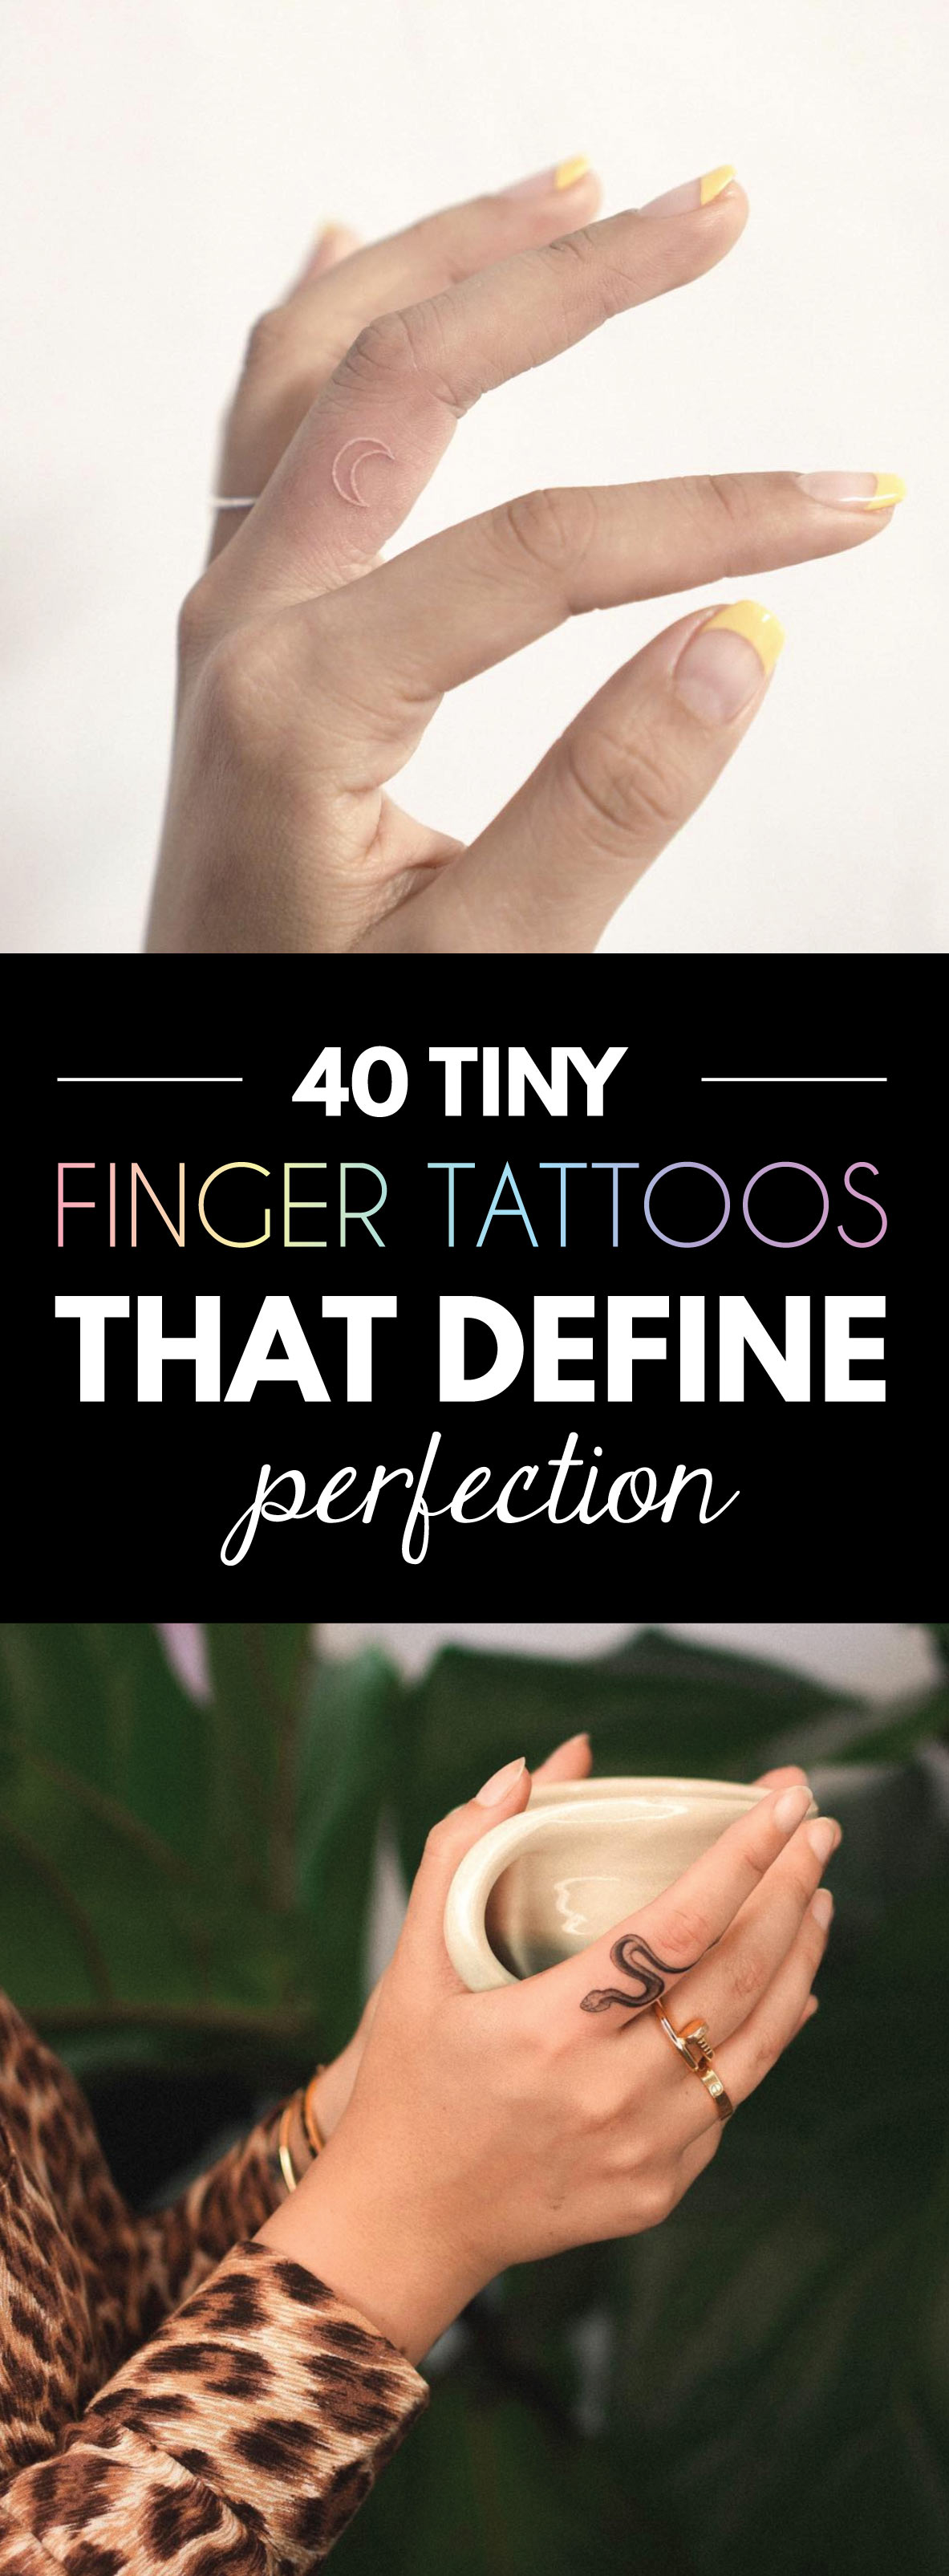 Finger tattoos, YAY!